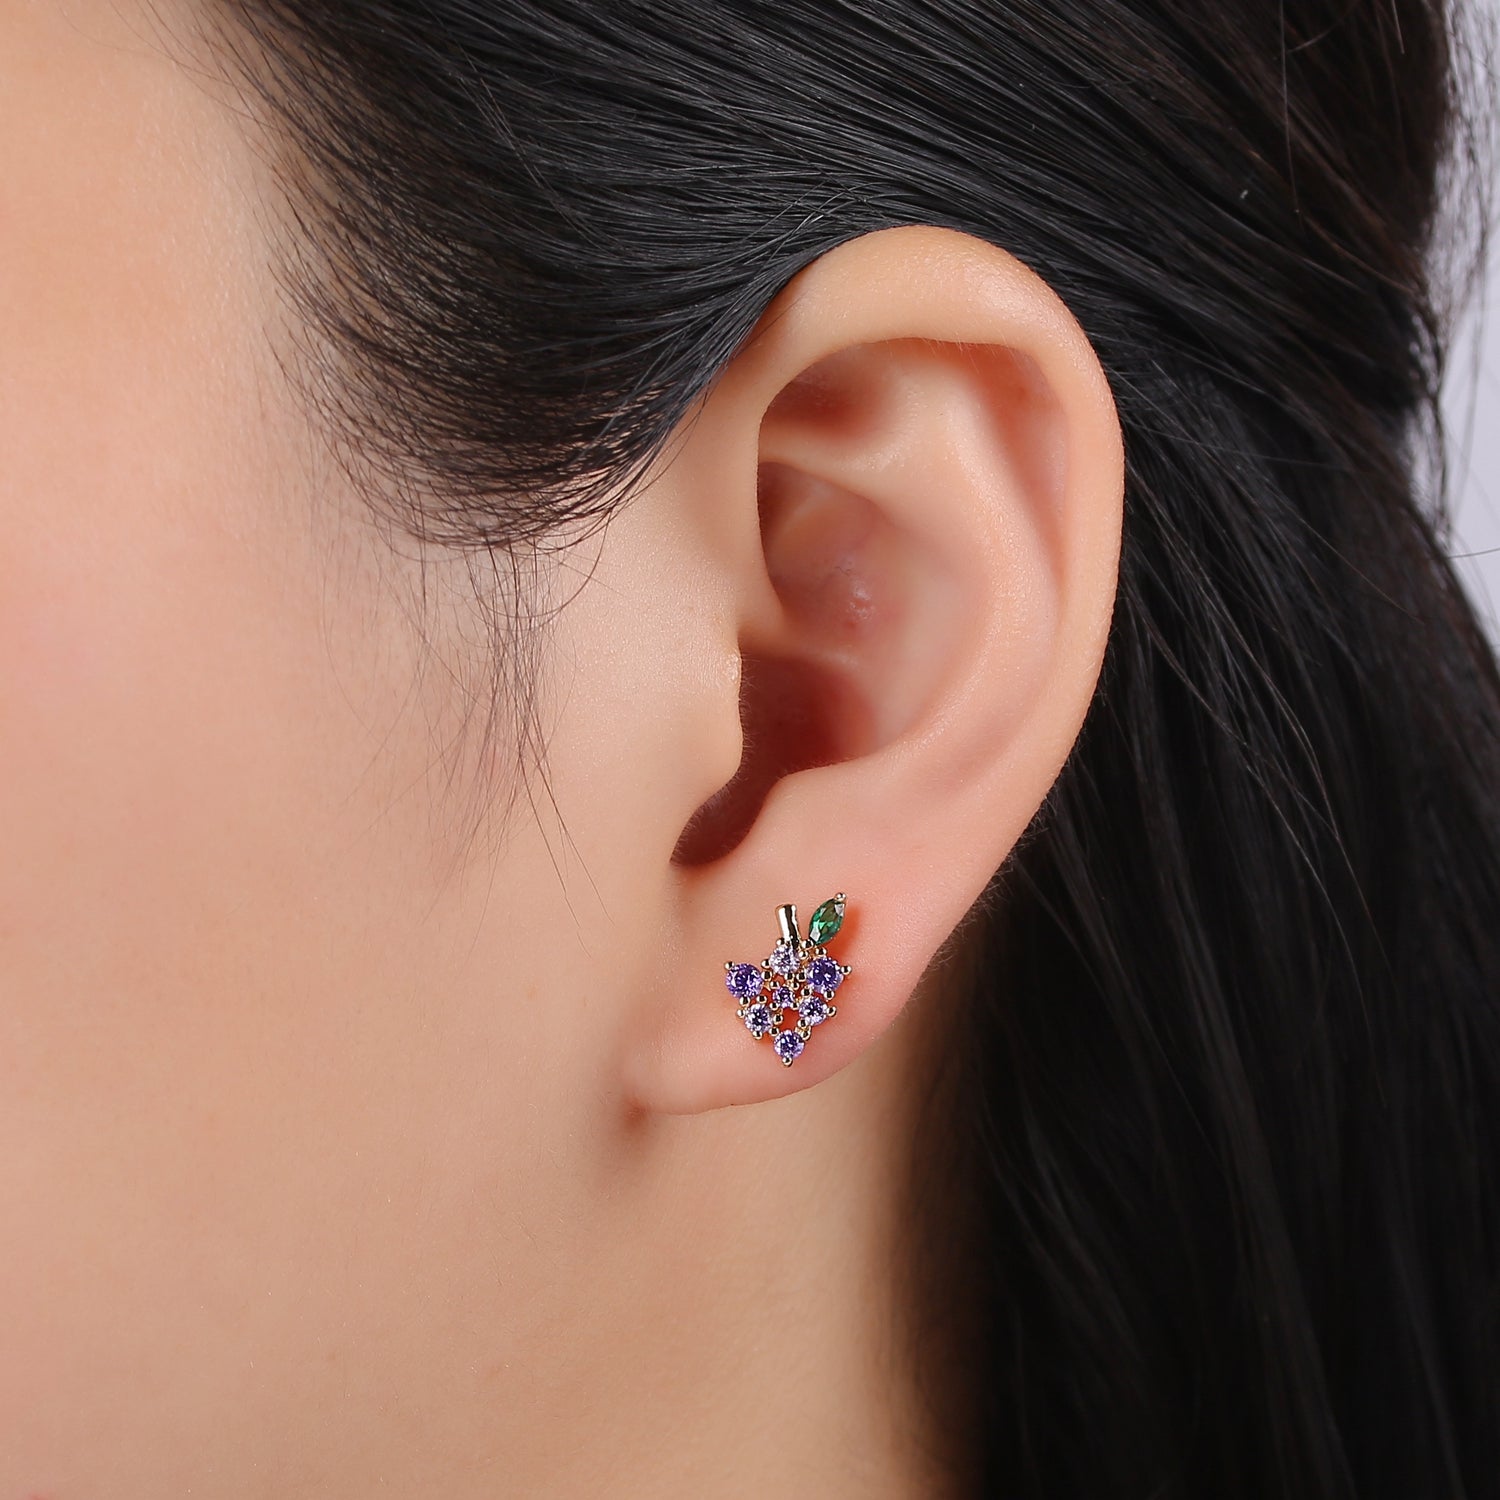 Gold Grape Stud Earring, Crystal Grape Studs, Grape Fruit Earring, Minimalist Earring, Dainty Earrings for Girls, Gift - DLUXCA